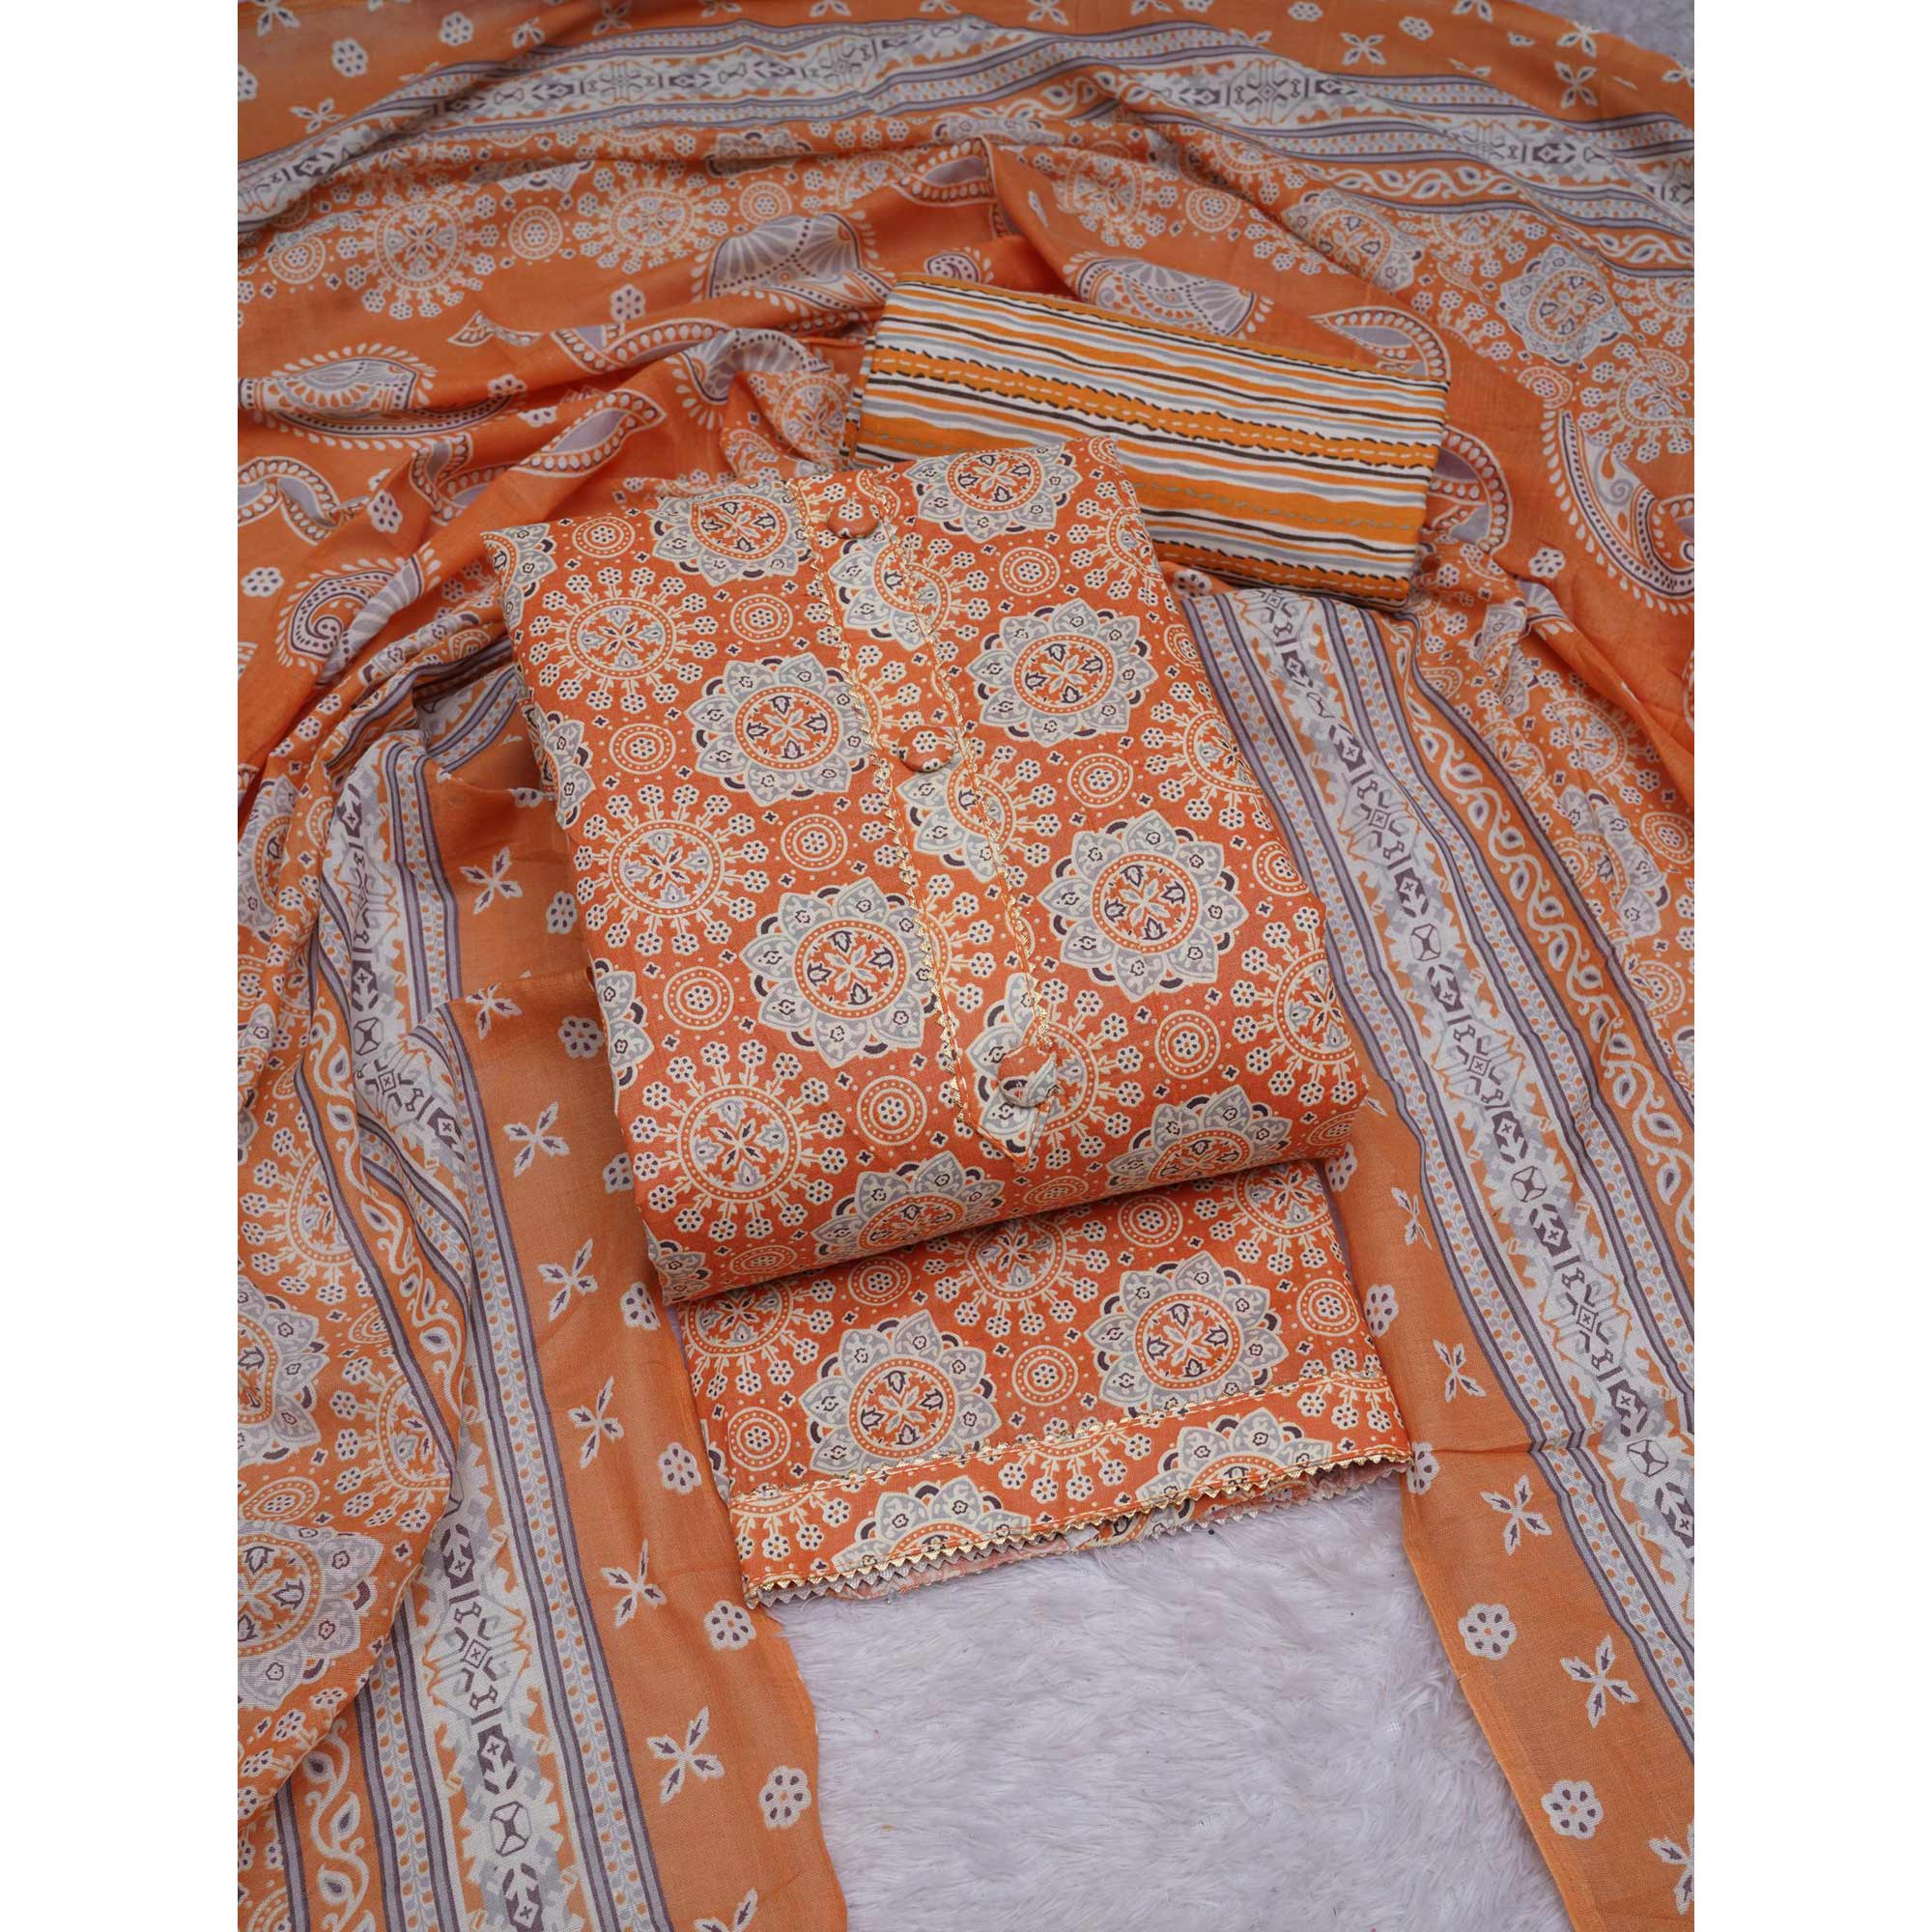 Orange Floral Printed Cotton Blend Dress Material